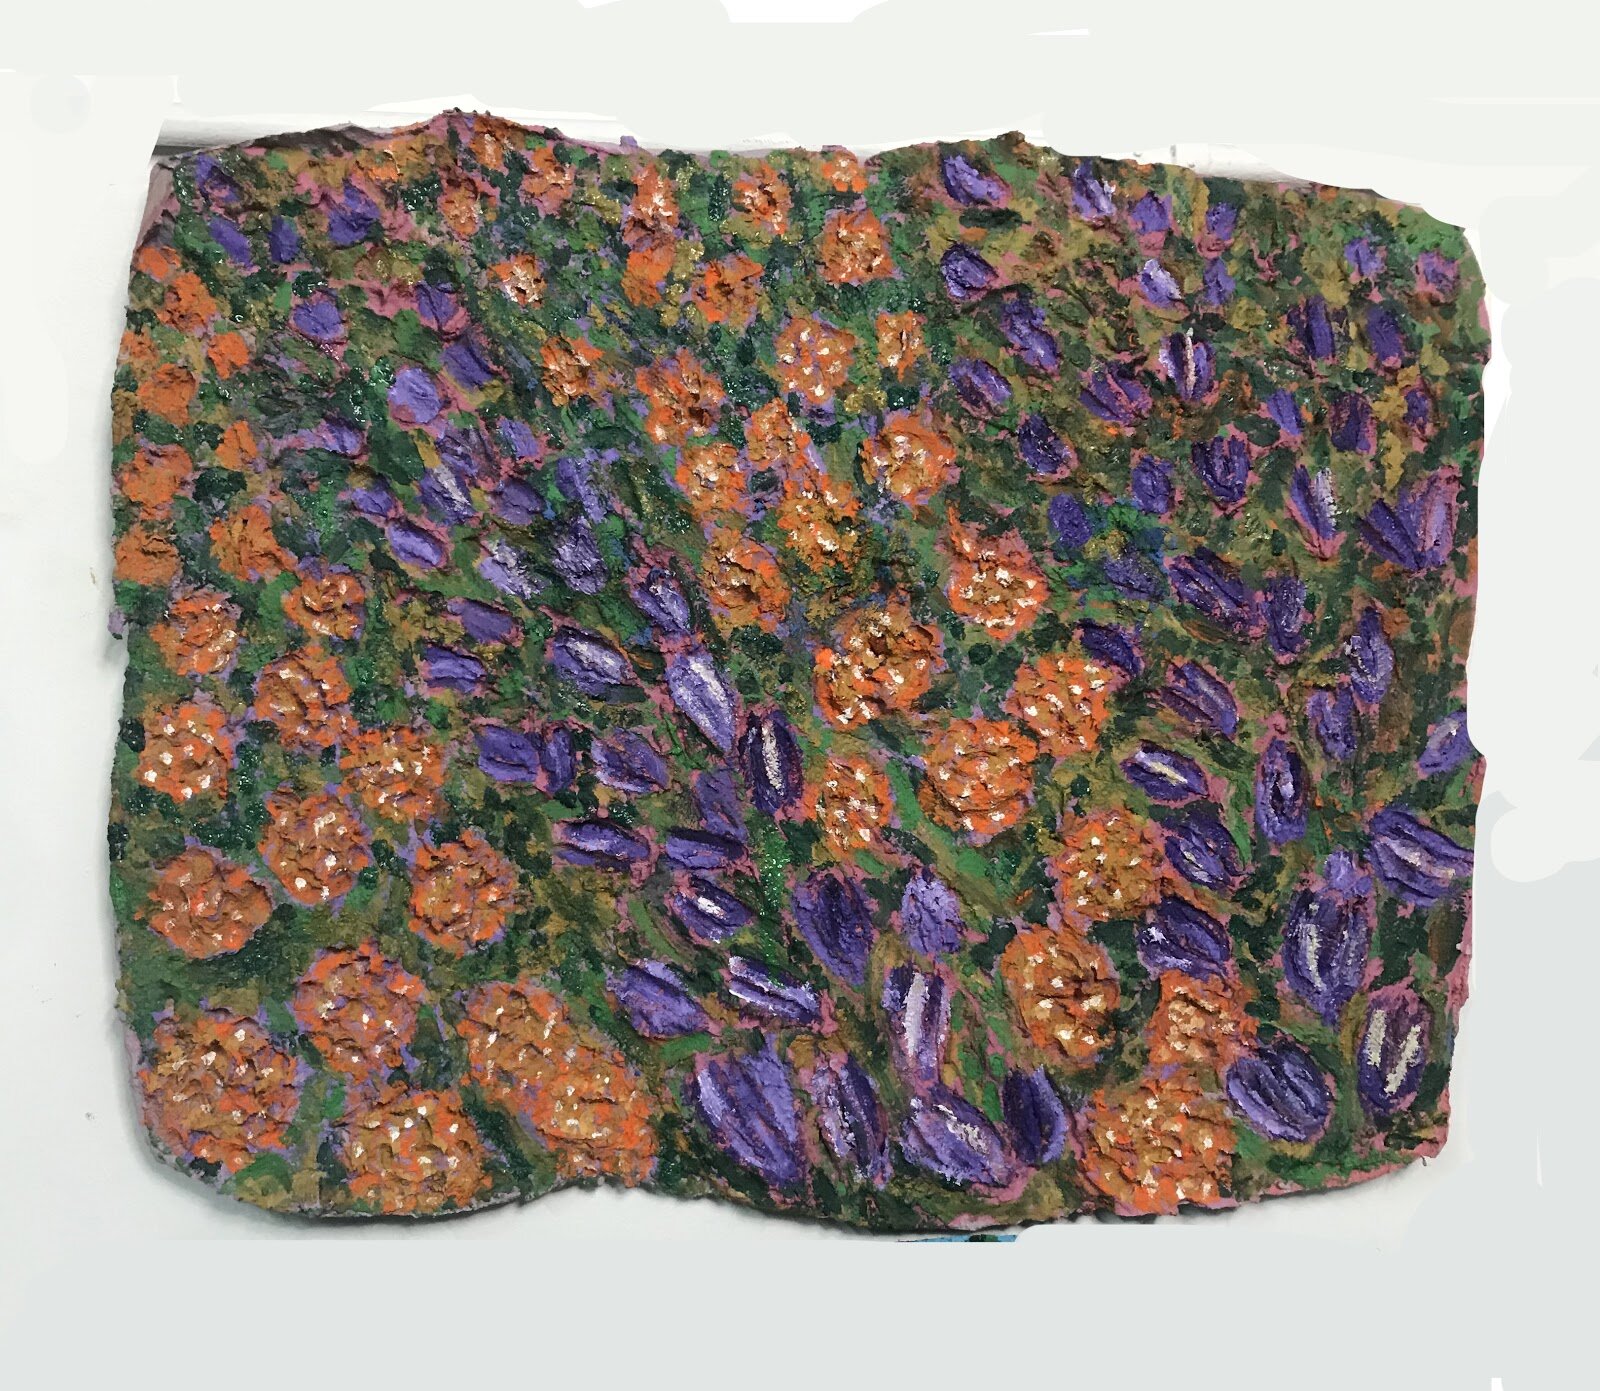   Jarrett Key   Alabama Flowers (Sunset),  2020 oil on cement (fresco) 21h x 23.5w inches 